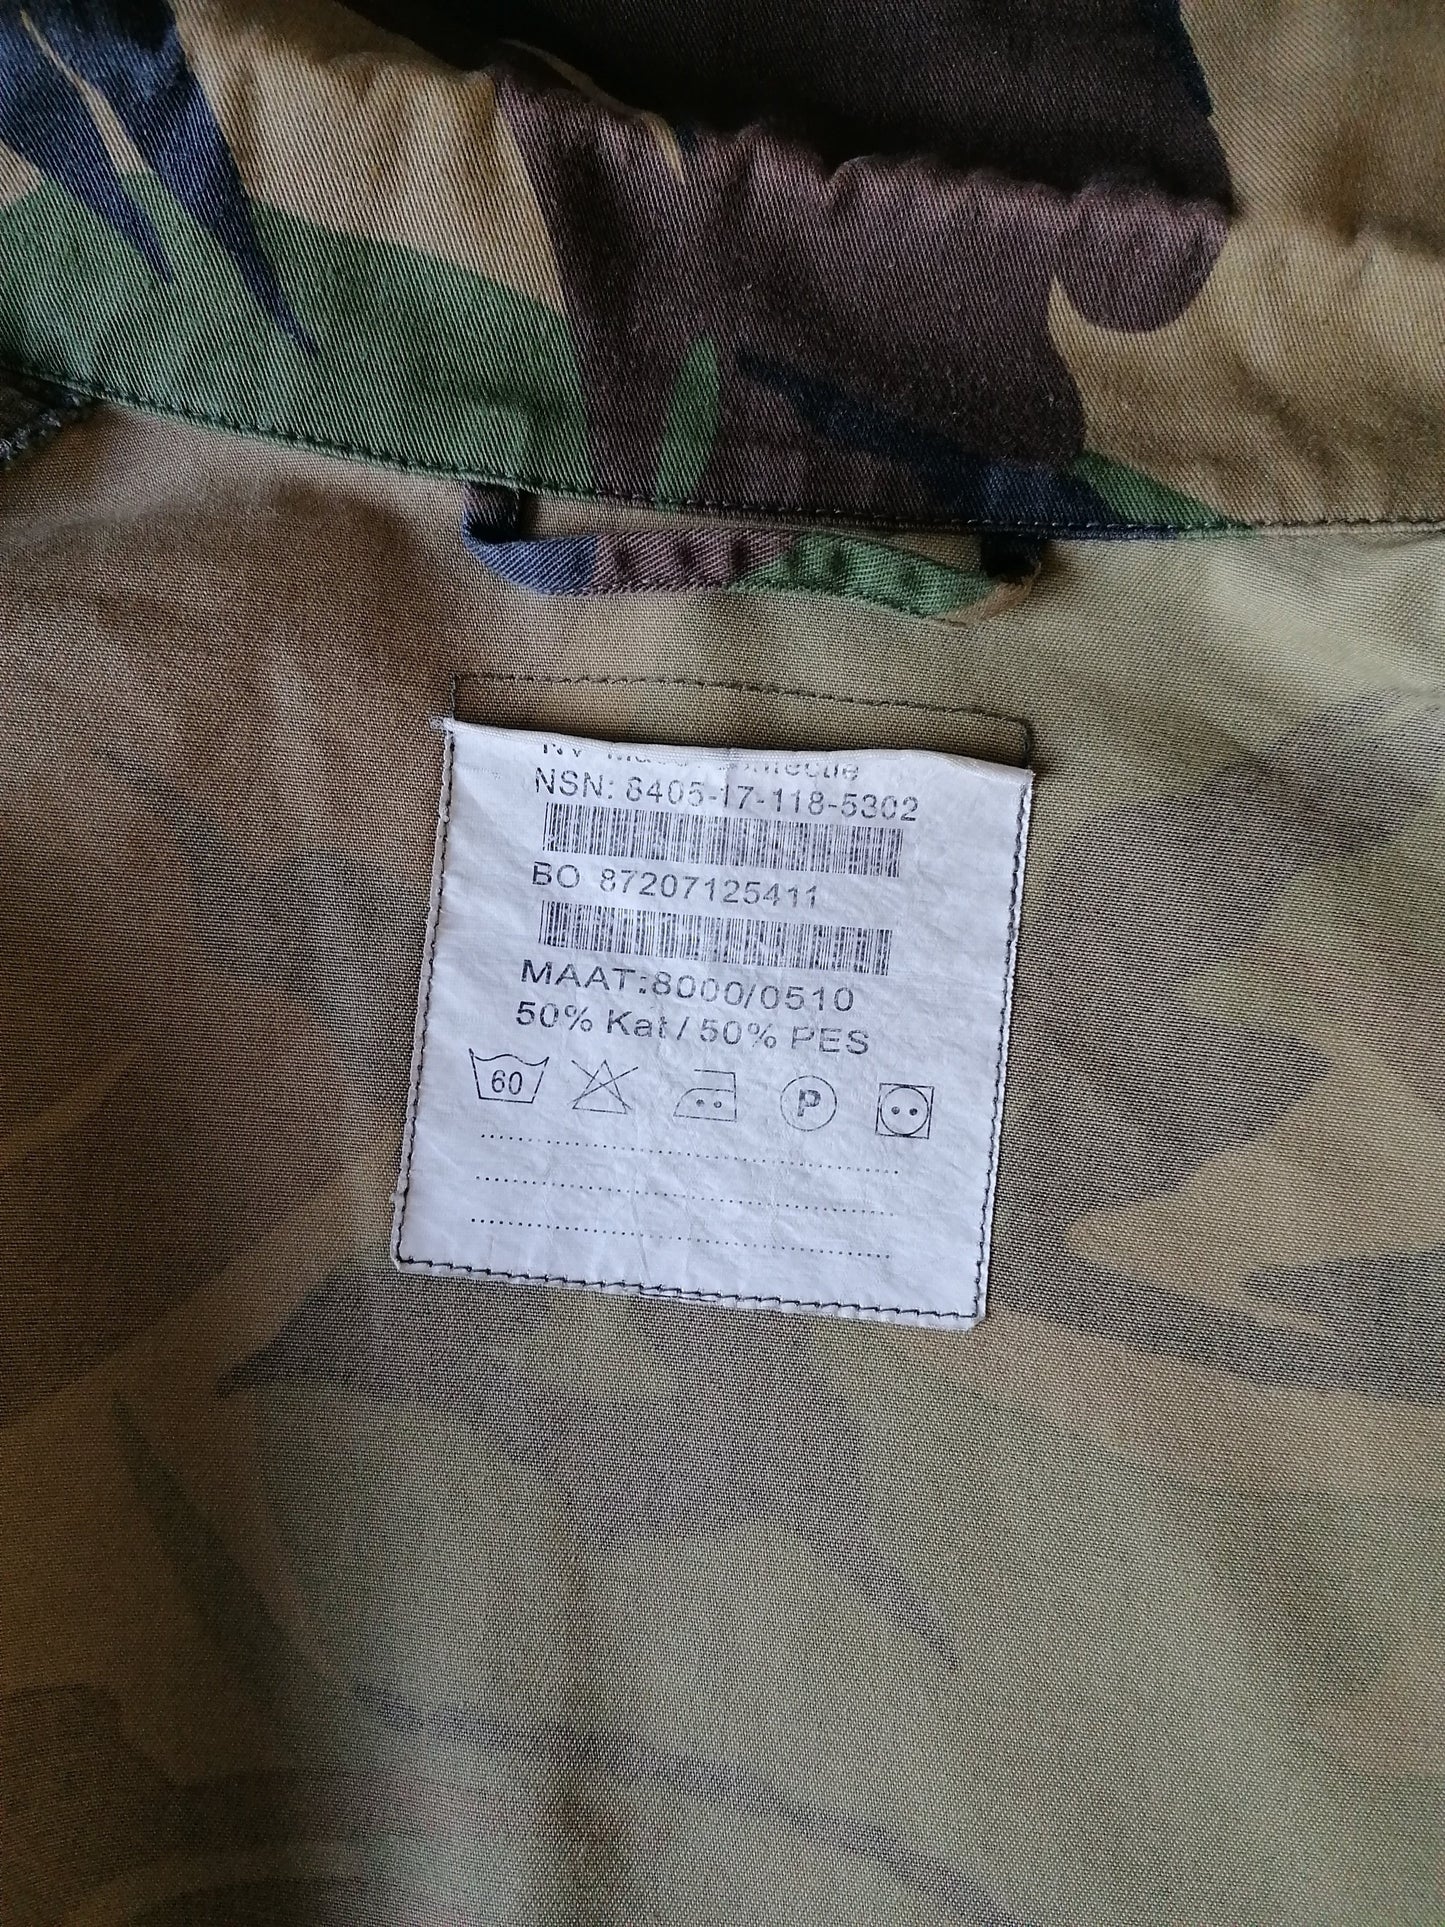 Vintage Army / Army shirt. Camouflage print with press studs. Size XL. Original.